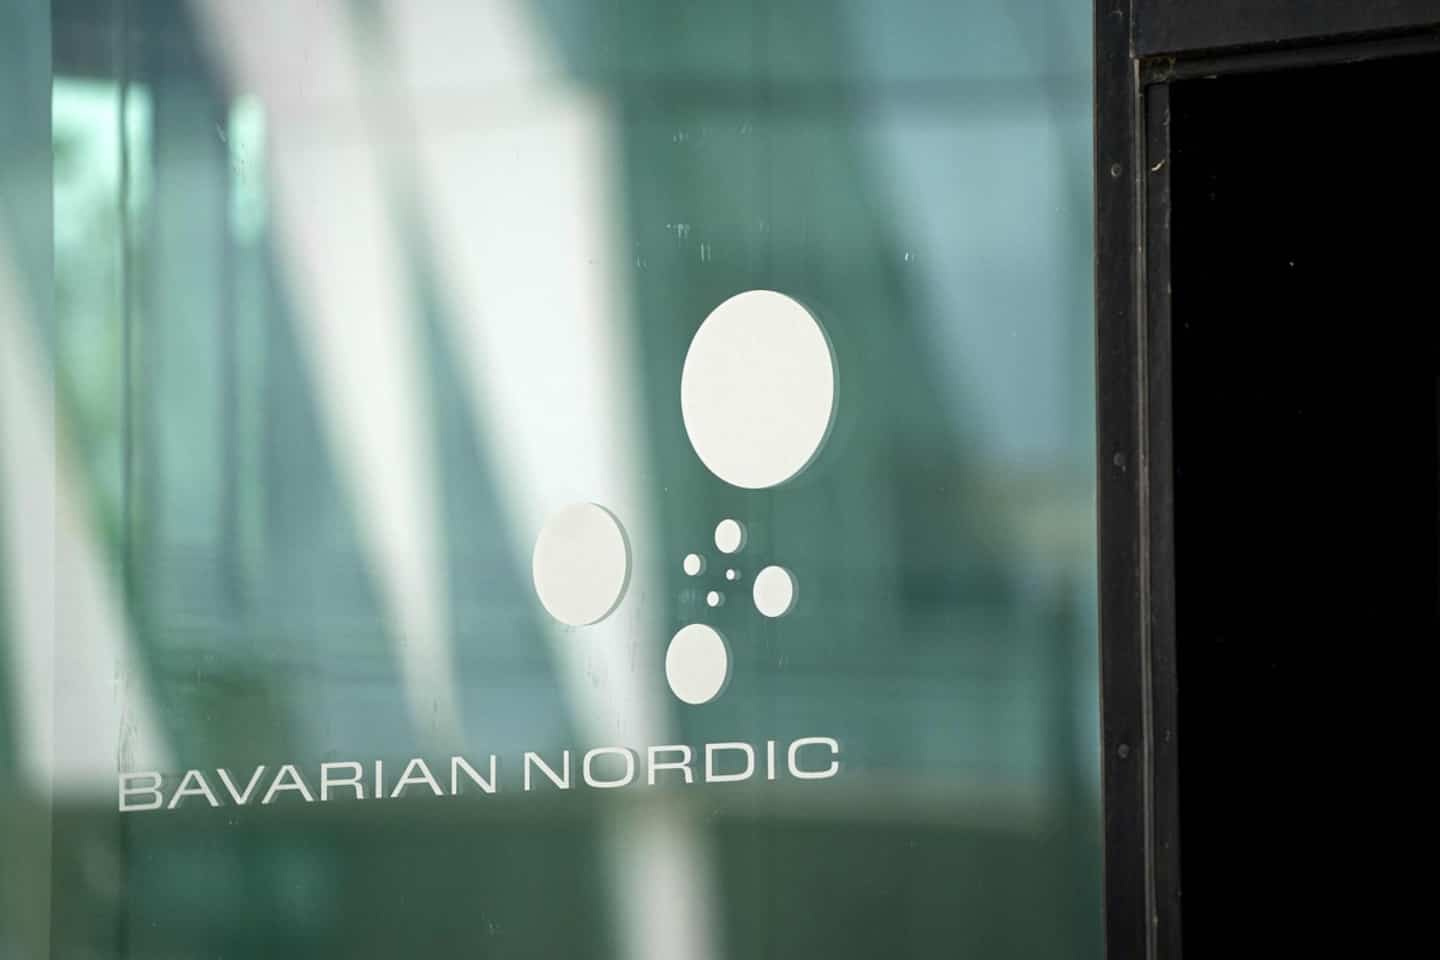 EU approves Danish Bavarian Nordic's monkeypox vaccine